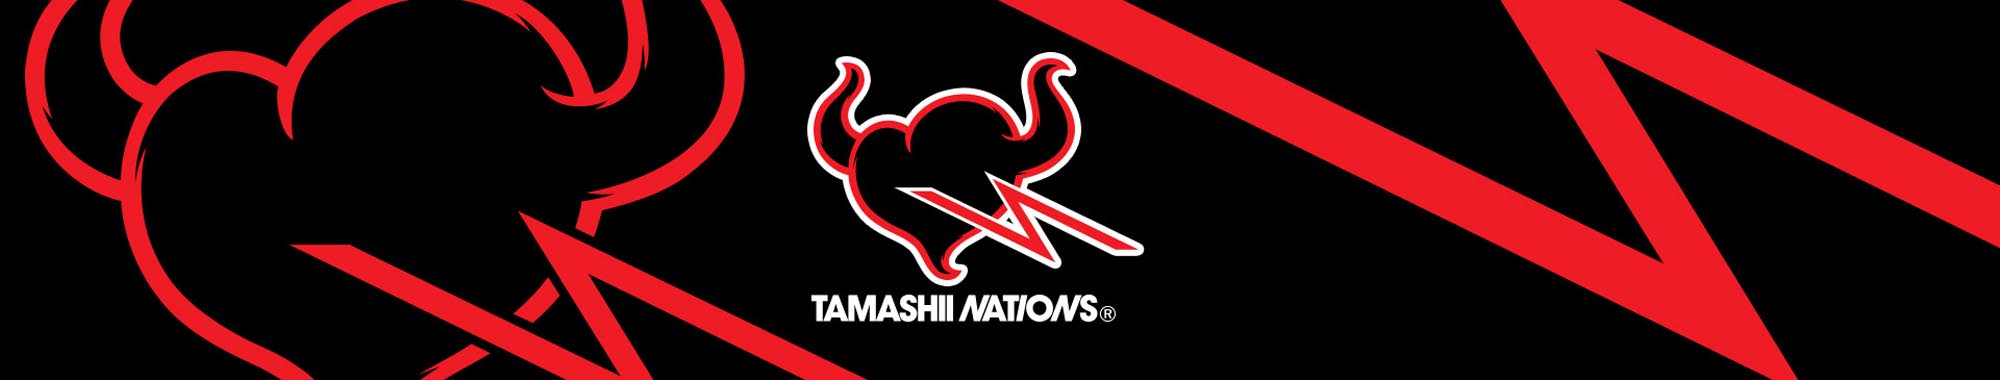 Tamashii Nations at Panosh Place